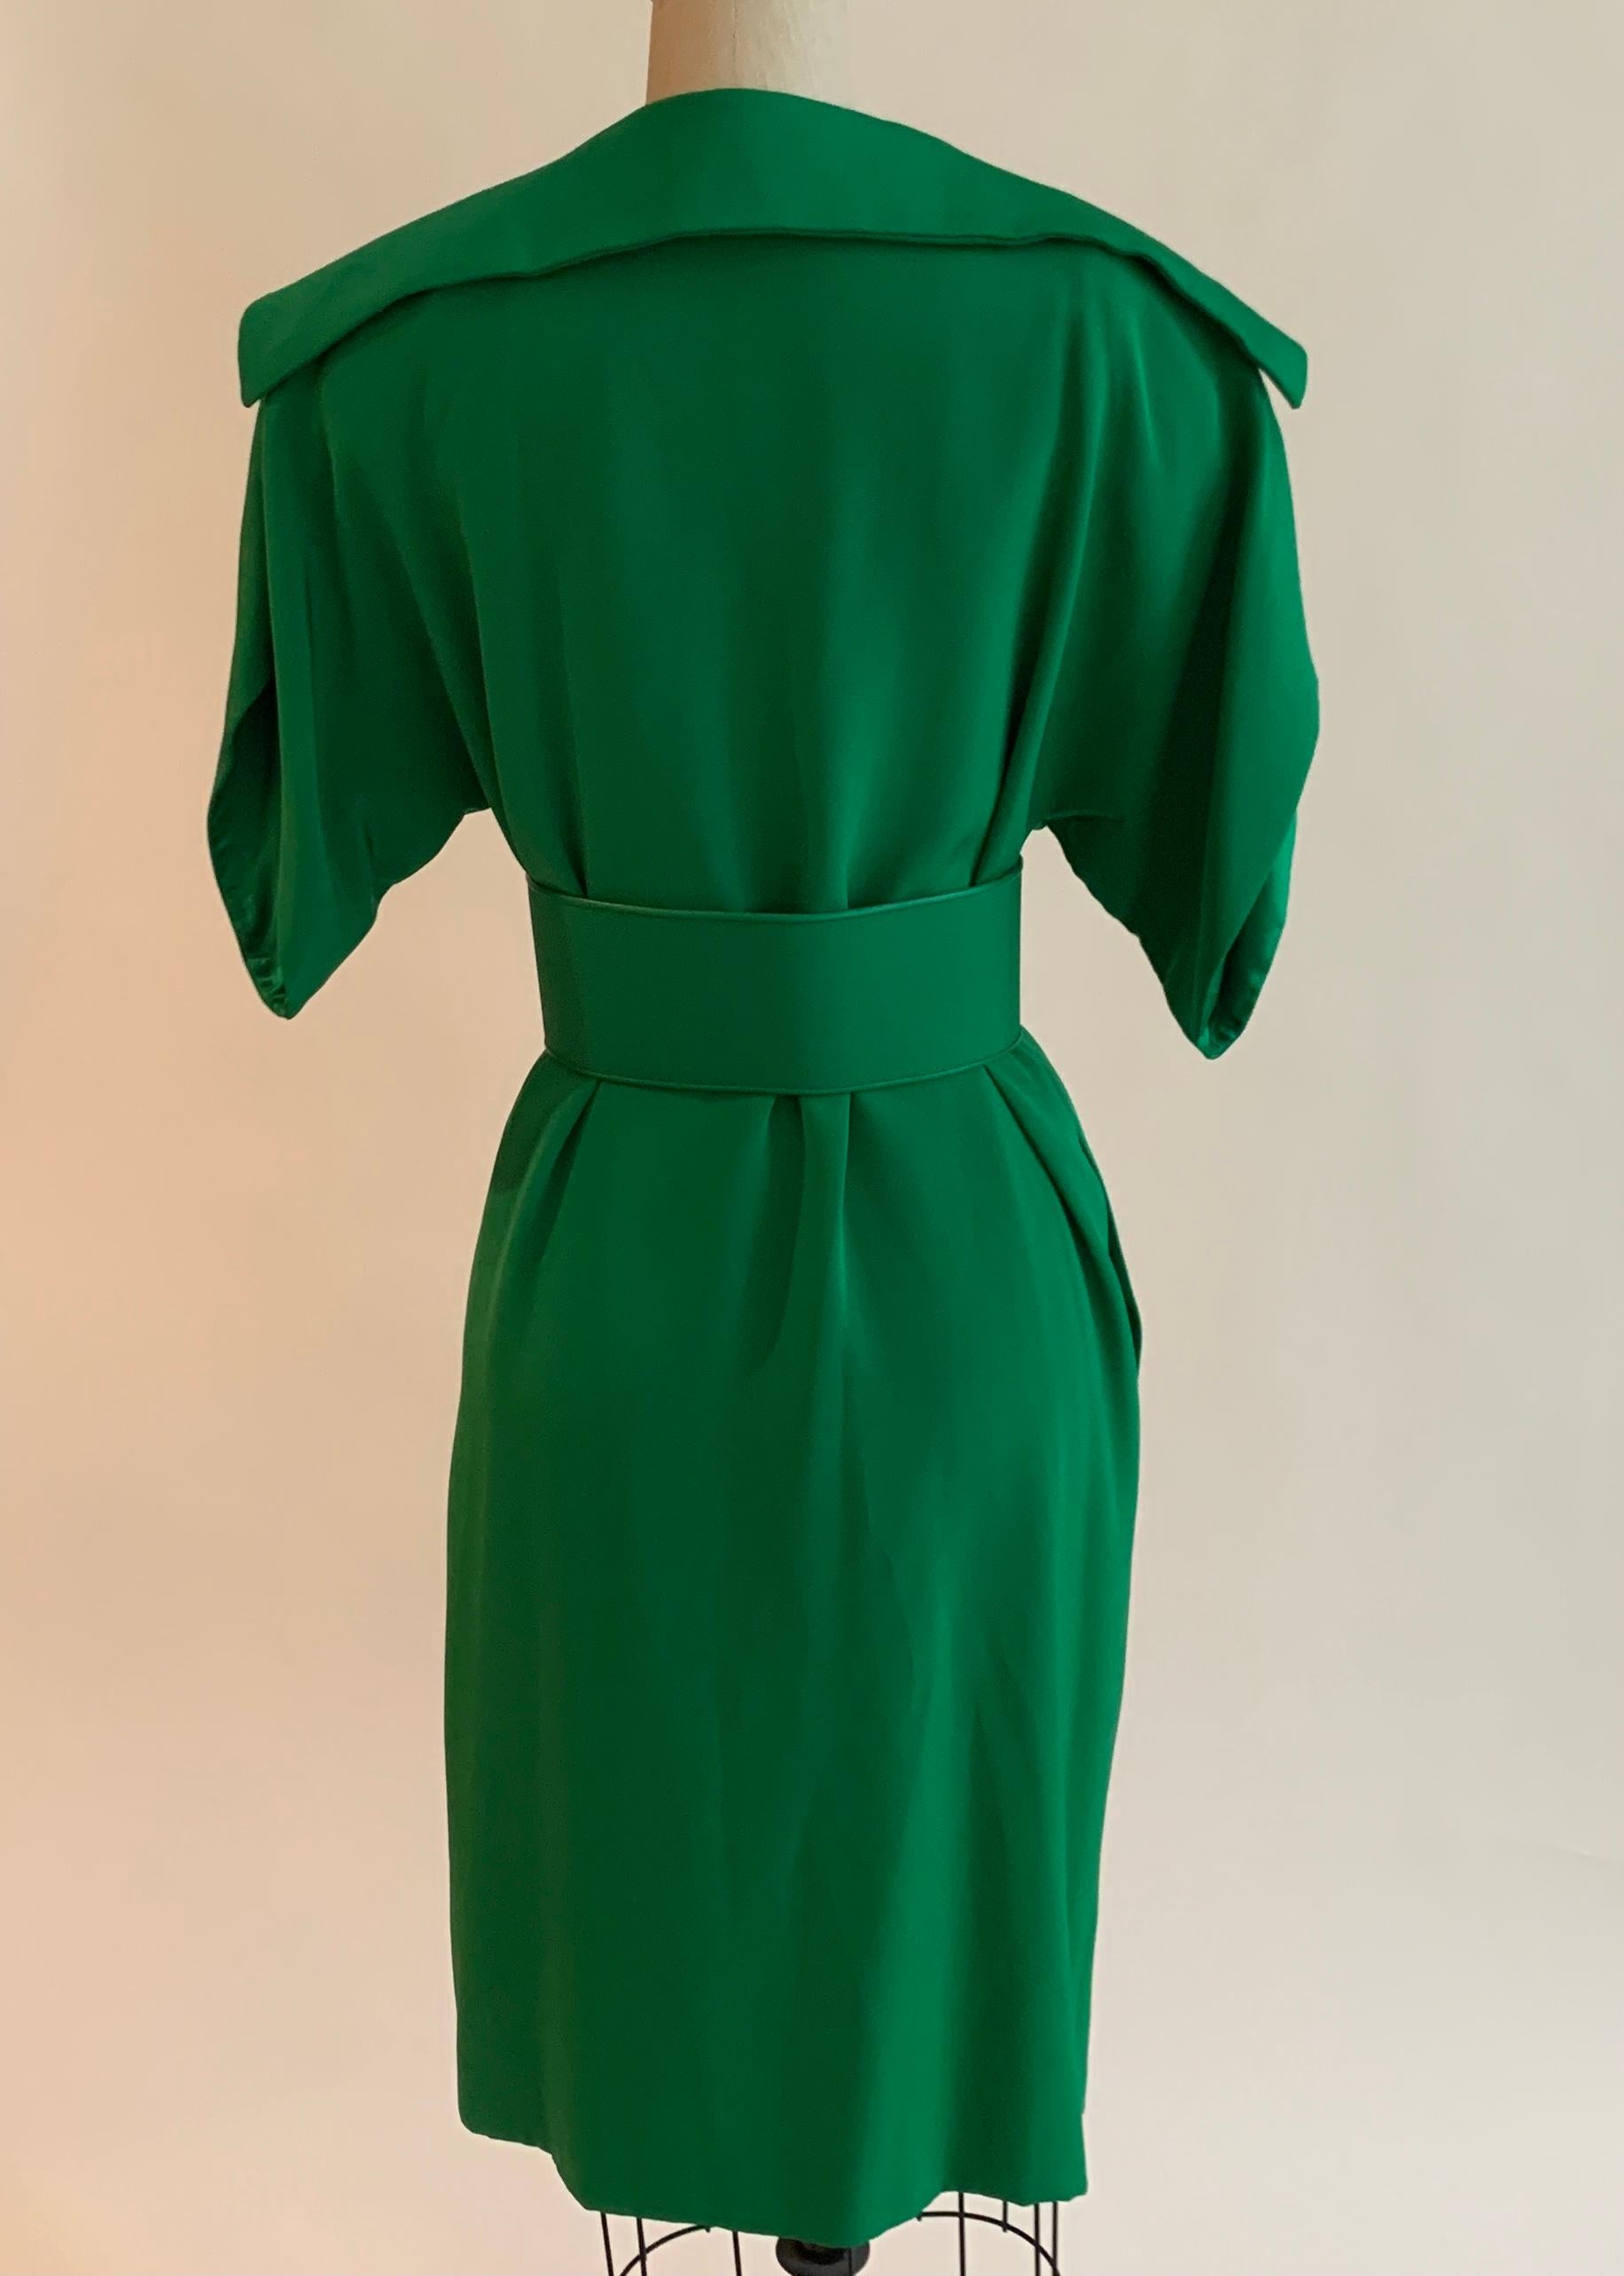 Women's Unworn Galanos 1980s Kelly Green Coat Dress with Draped Shawl Collar